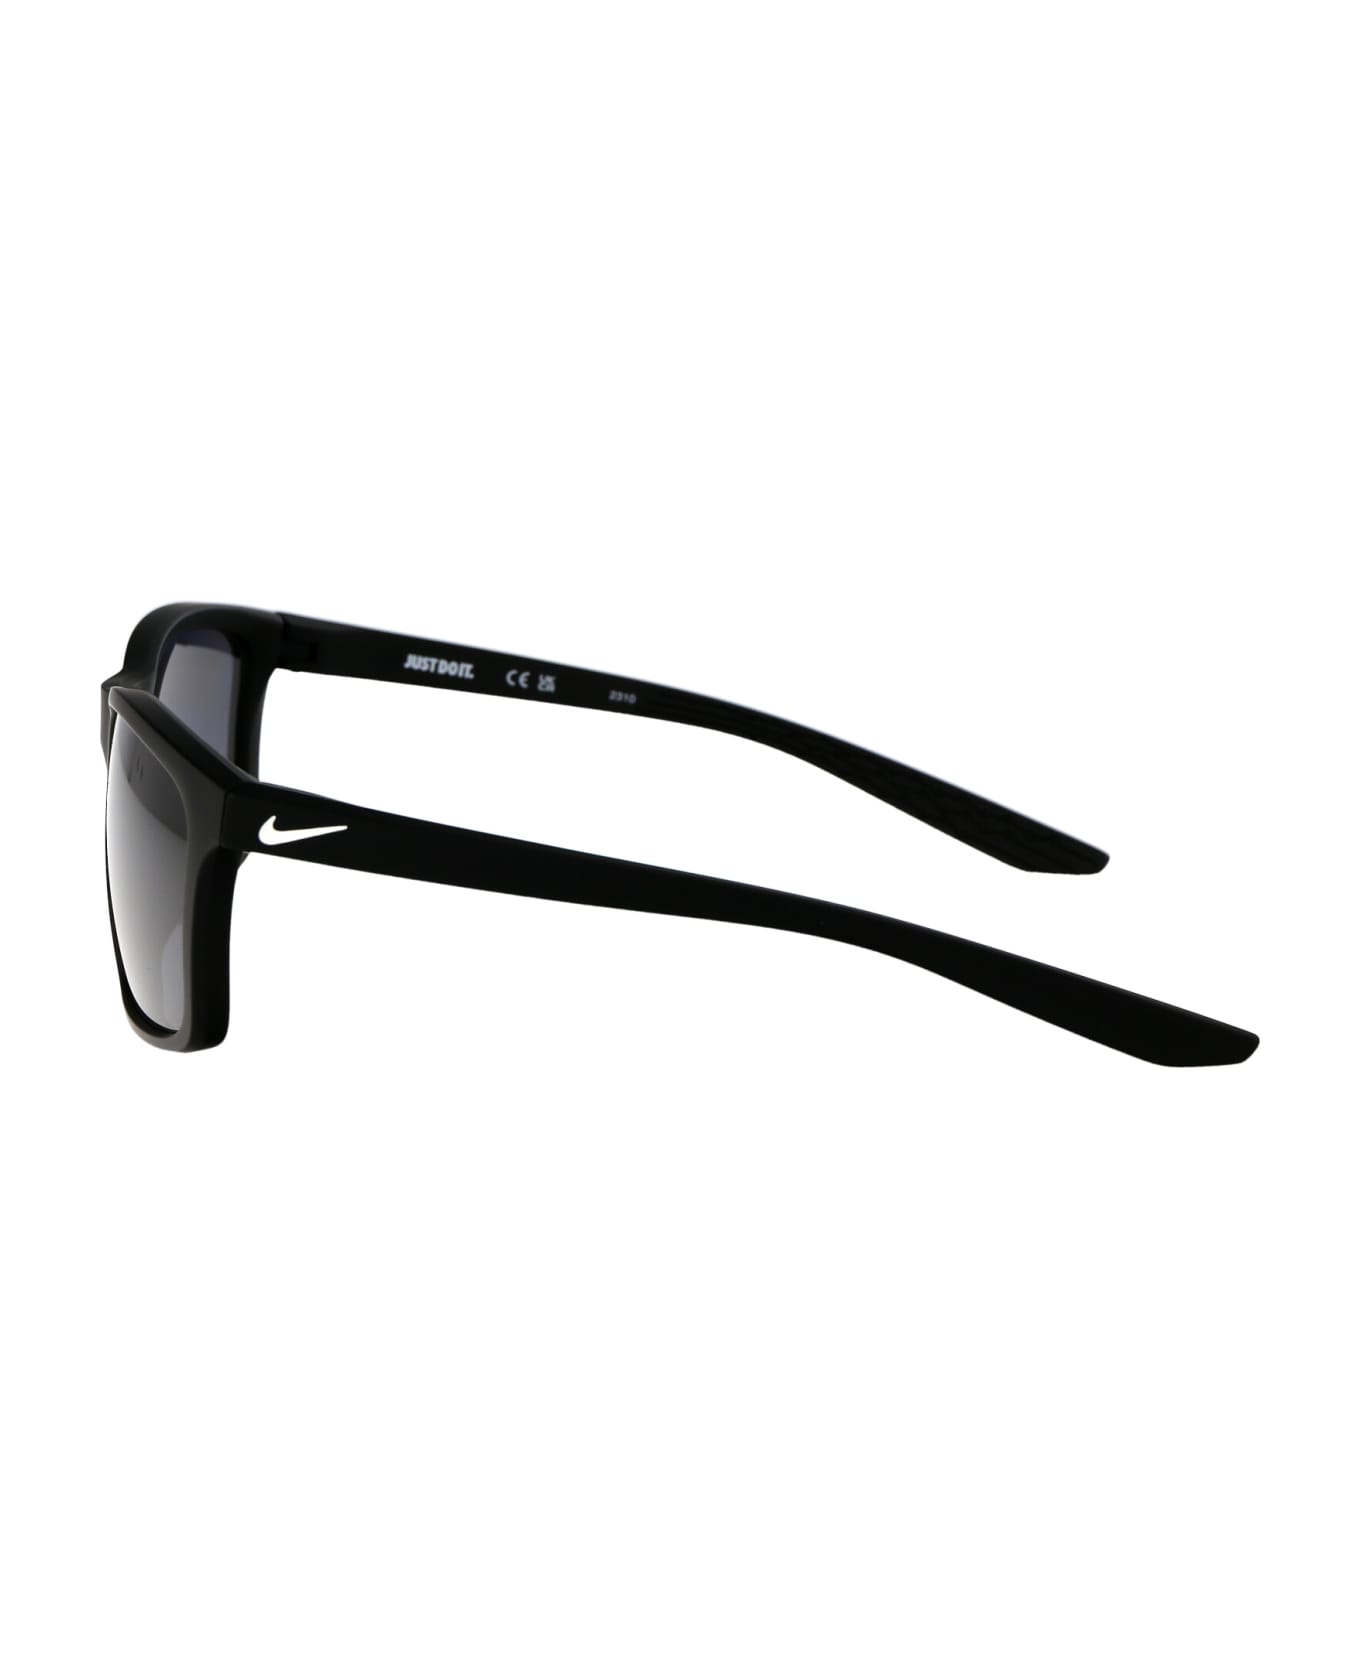 Nike Valiant Sunglasses - 010 DARK GREY MATTE BLACK